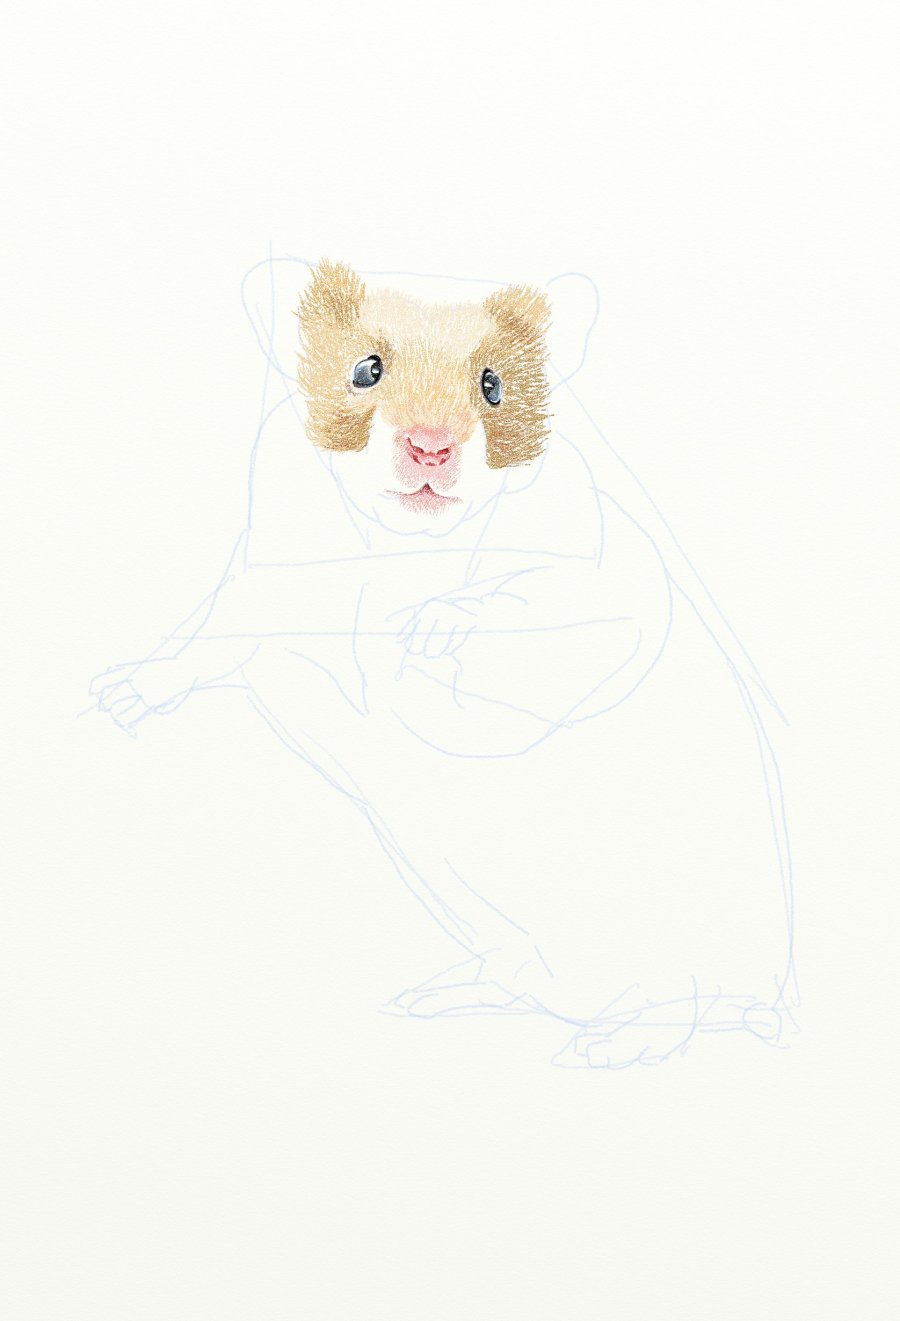 painter绘制一只可爱的小老鼠插画6